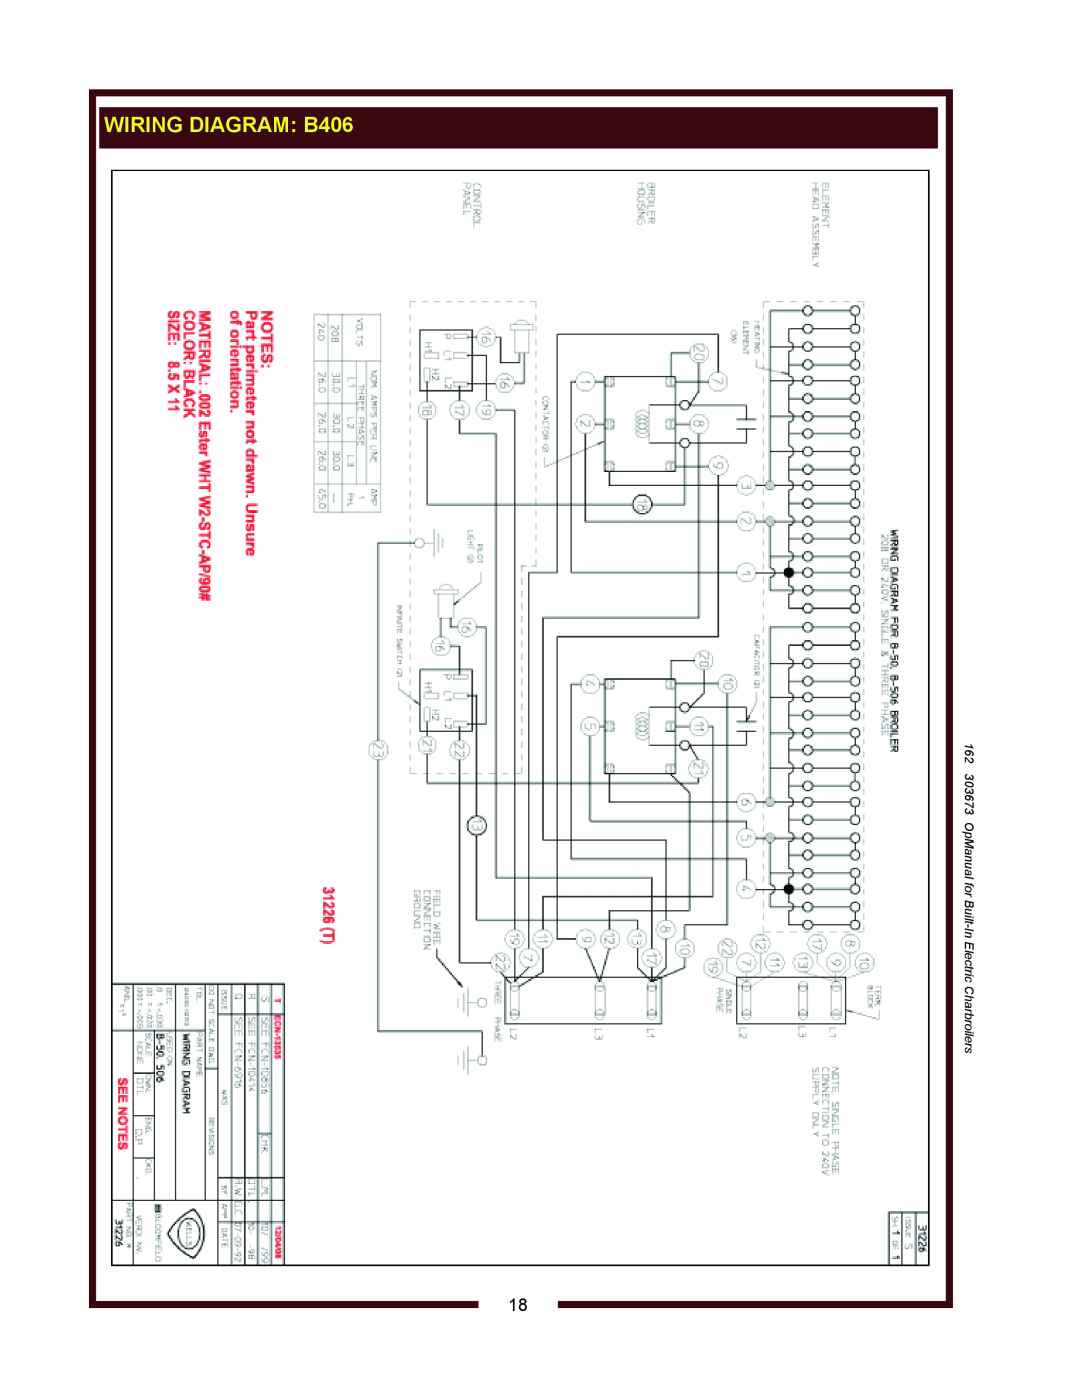 Wells B446, B506 operation manual WIRING DIAGRAM B406 